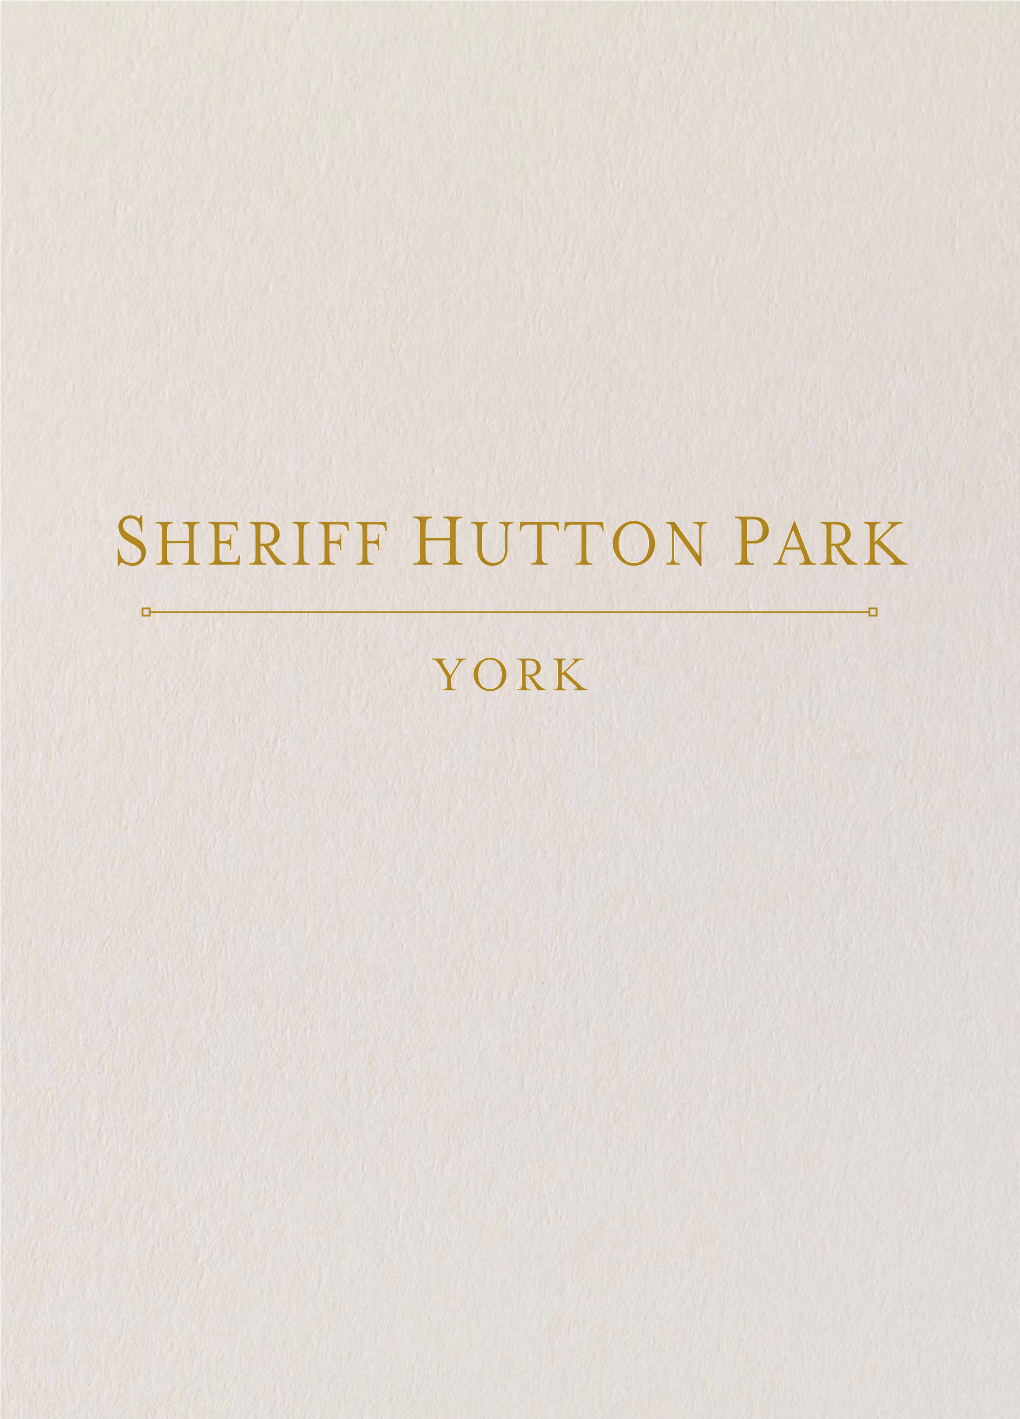 Sheriff Hutton Park